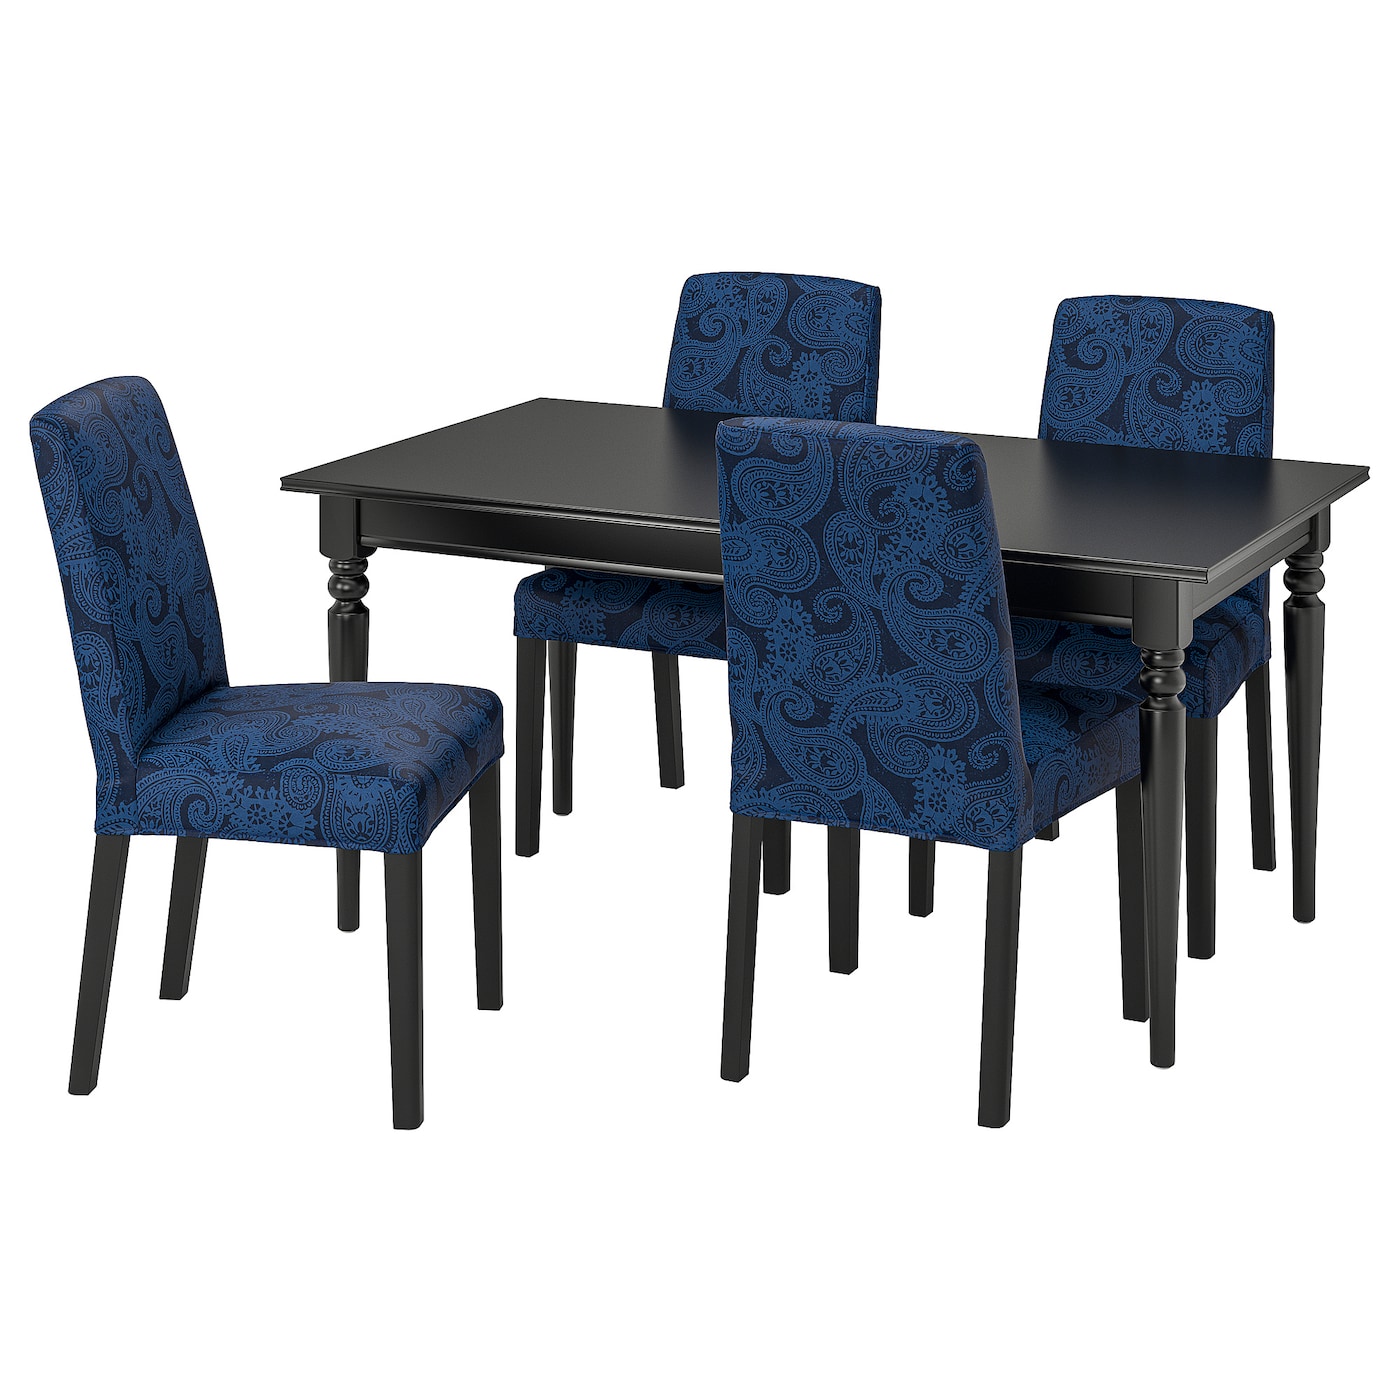 Стол и 4 стула - INGATORP / BERGMUND IKEA/ ИНГАТОРП/БЕРГМУНД ИКЕА, 155х87х74  см, синий с рисунком/коричневый